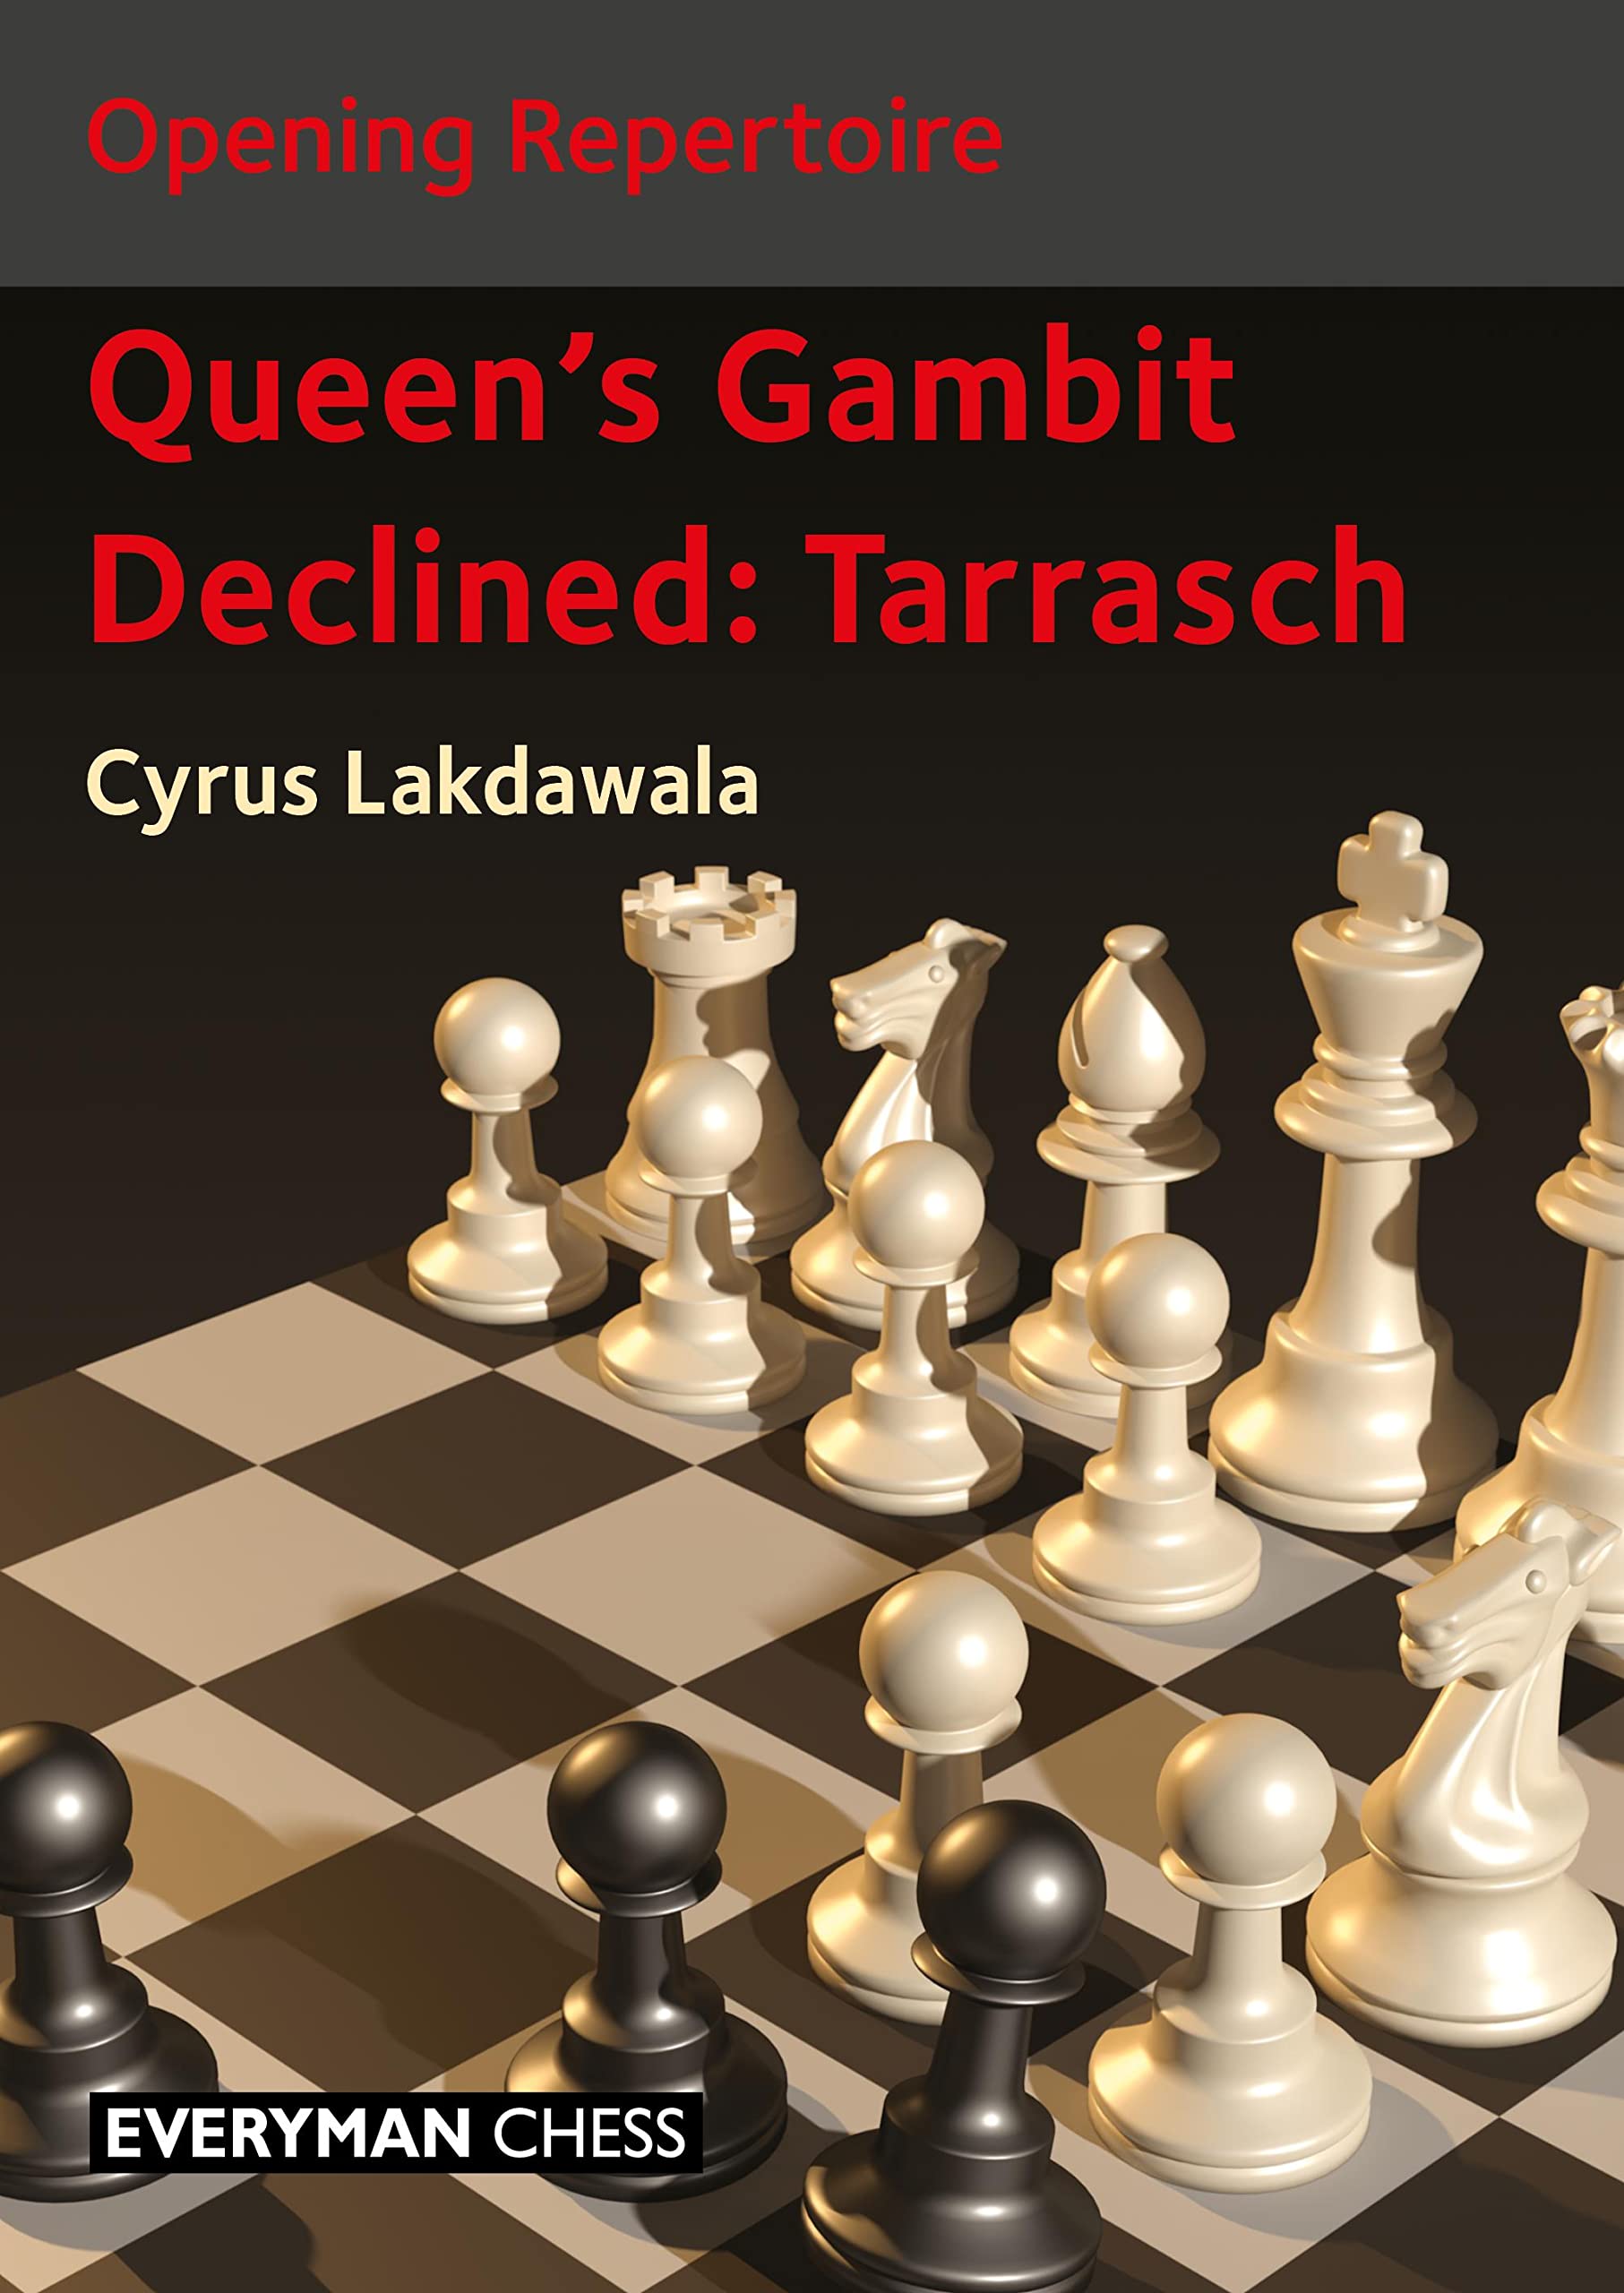 Opening Repertoire: Queen's Gambit Declined: Tarrasch, Cyrus Lakdawala, Everyman Chess (16 Jan. 2023), ISBN-13 ‏ : ‎ 978-1781946961